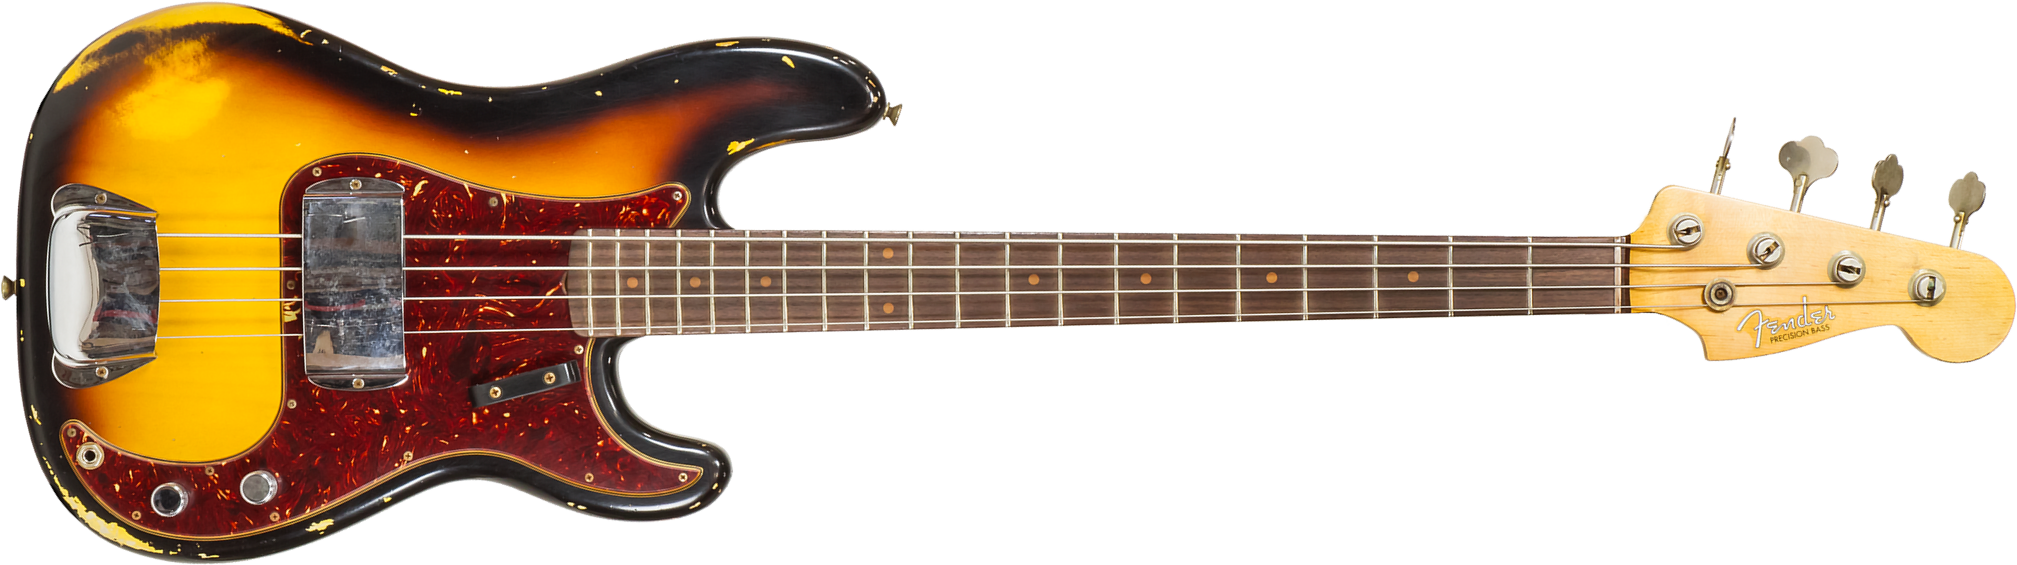 Fender Custom Shop Precision Bass 1963 Rw #cz560028 - Heavy Relic Aged 3-color Sunburst - Solid body elektrische bas - Main picture